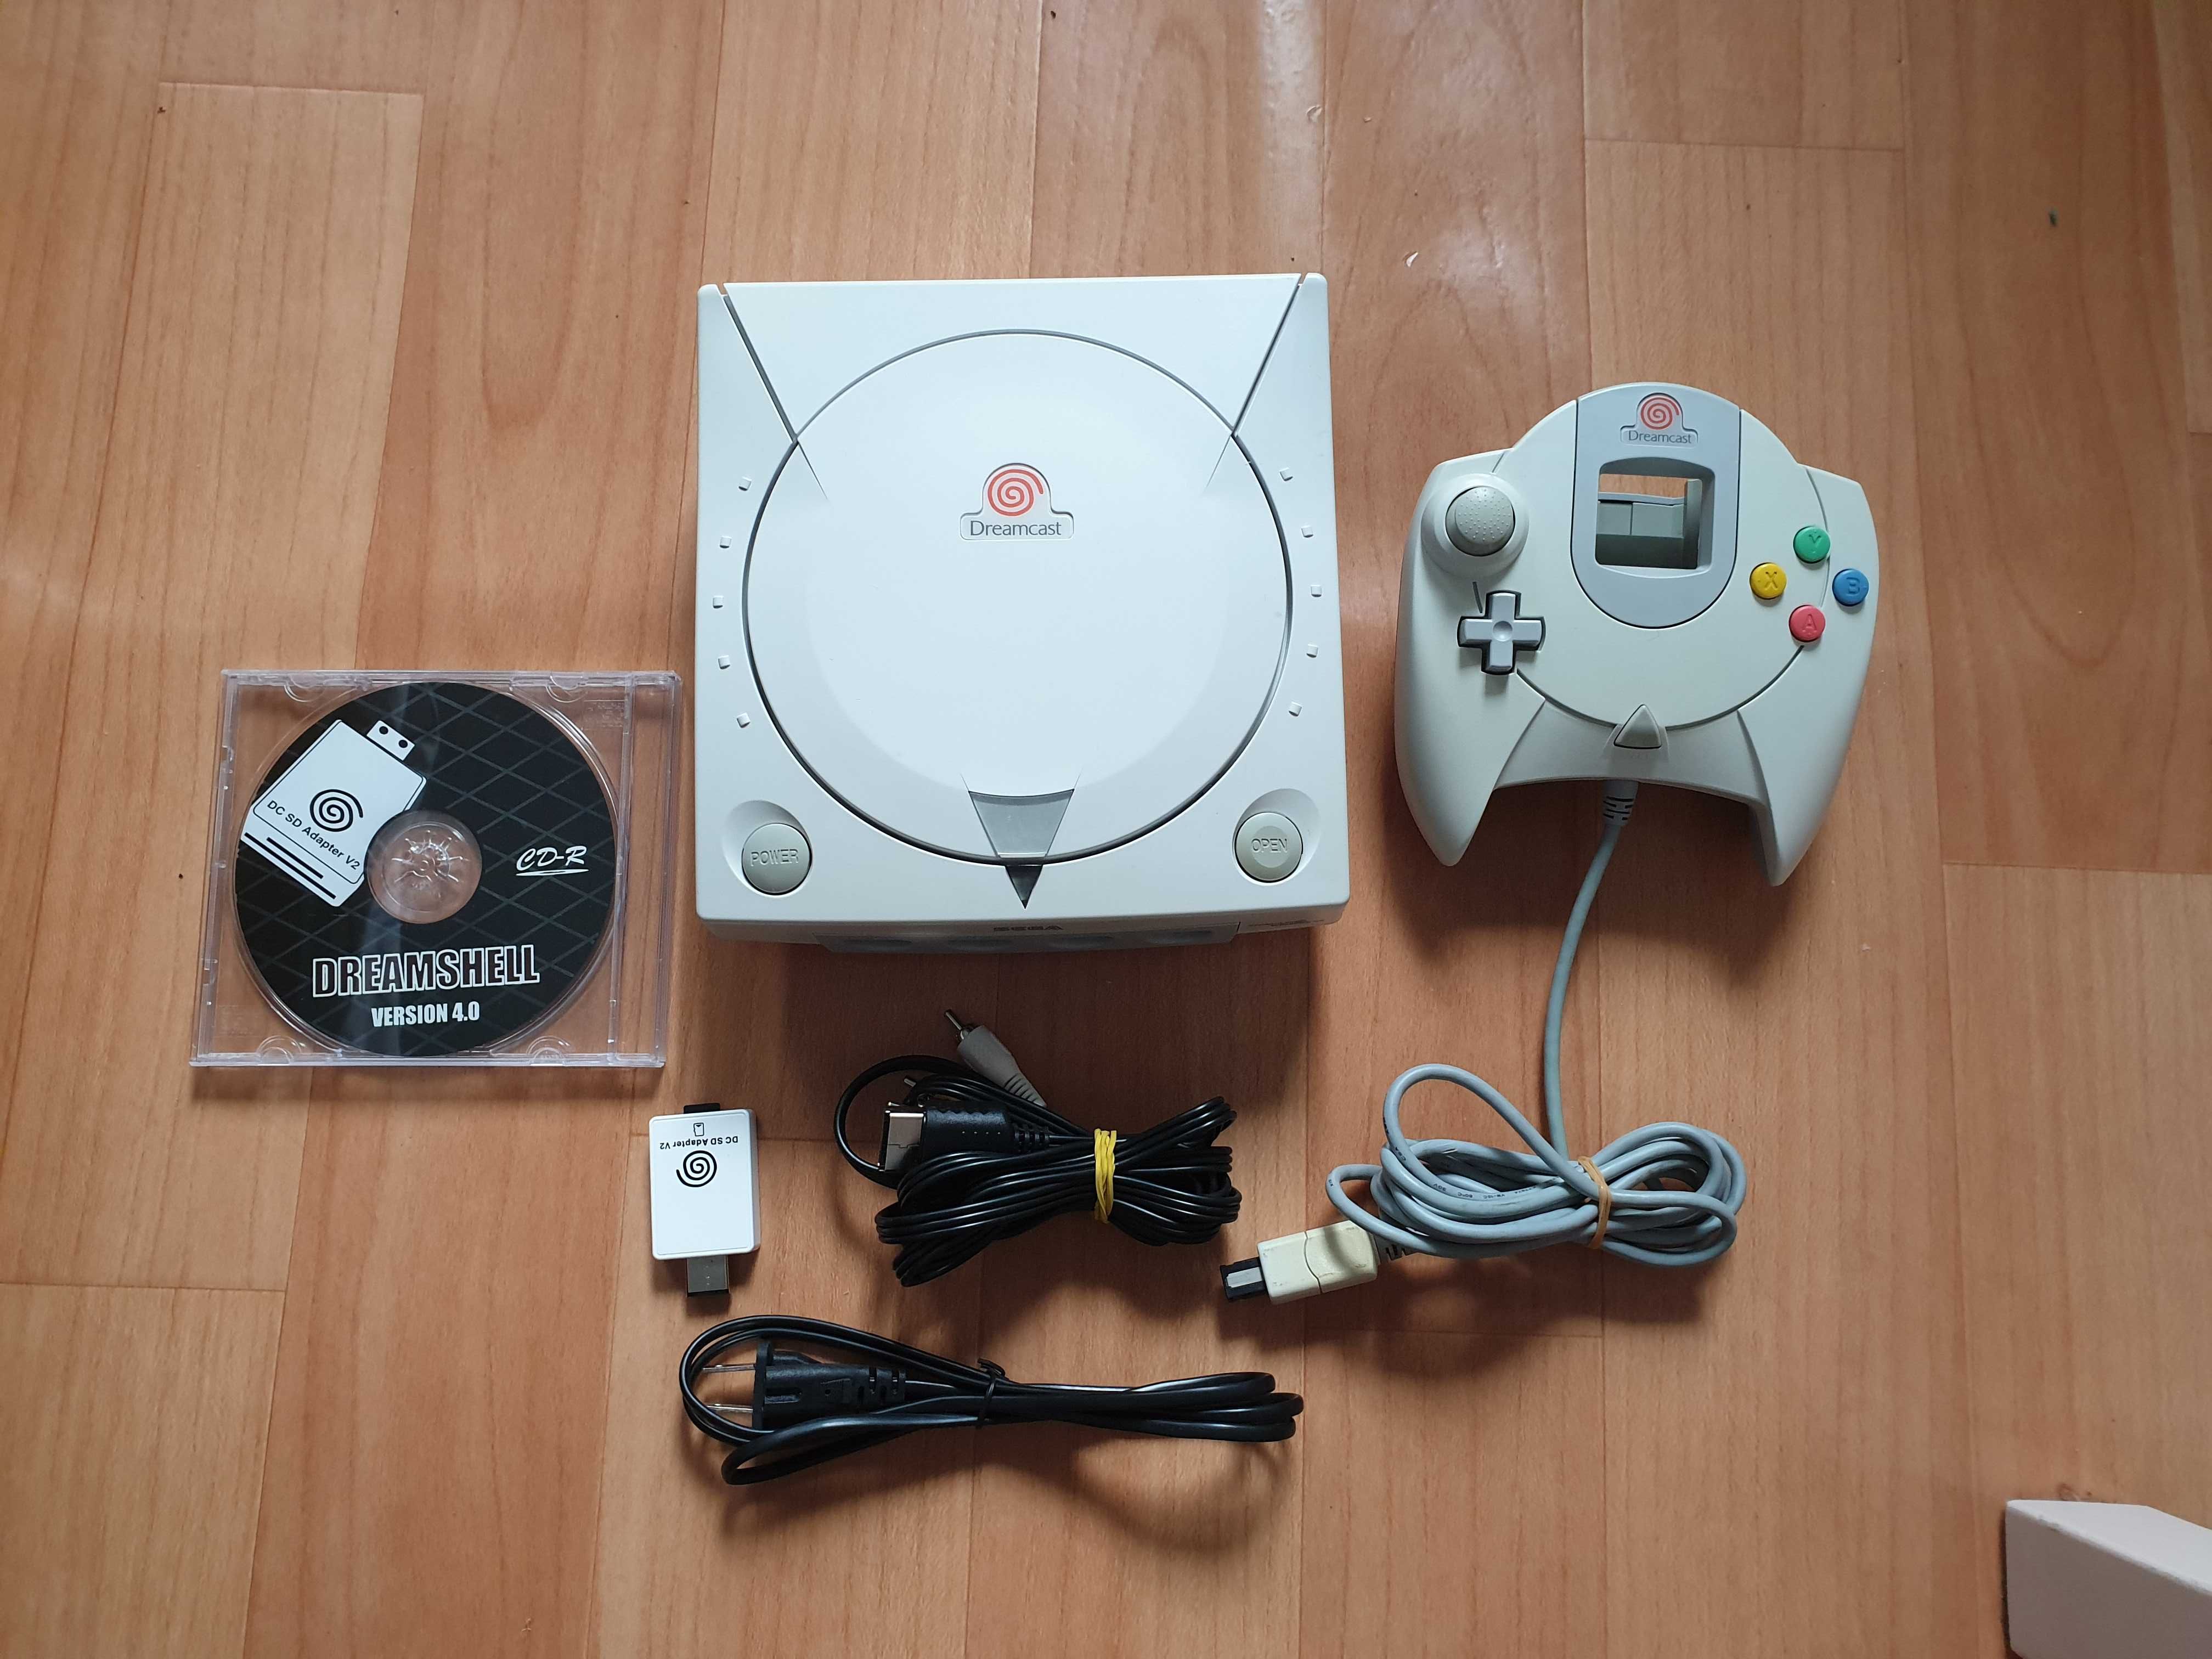 Sega Dreamcast Japan комплект + dreamshell 64Gb с играми